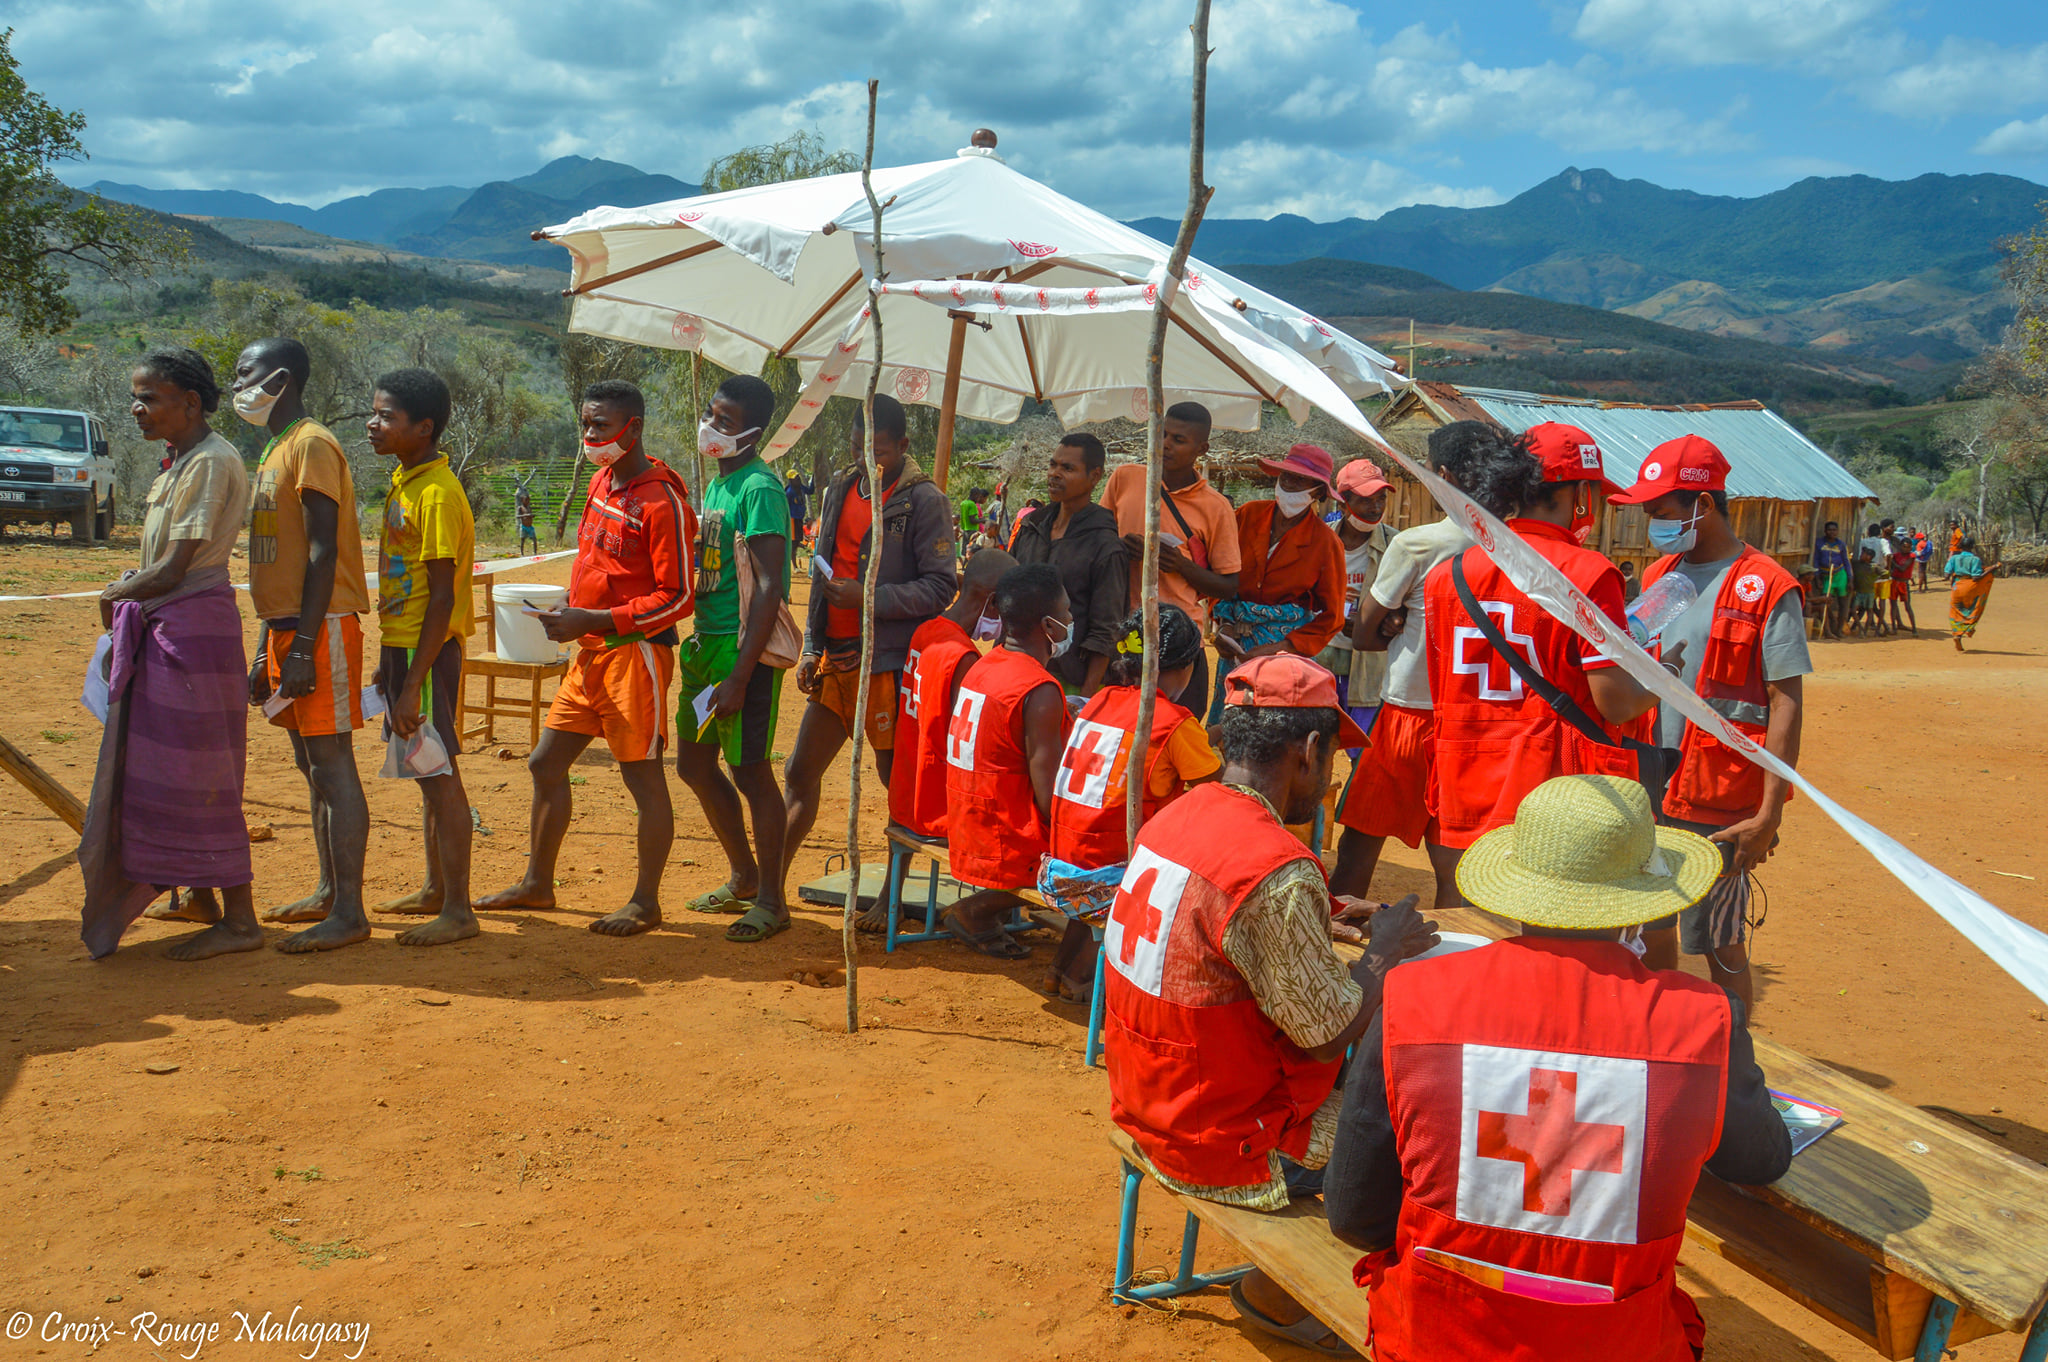 Projet d'urgence Sud Croix-Rouge Malagasy